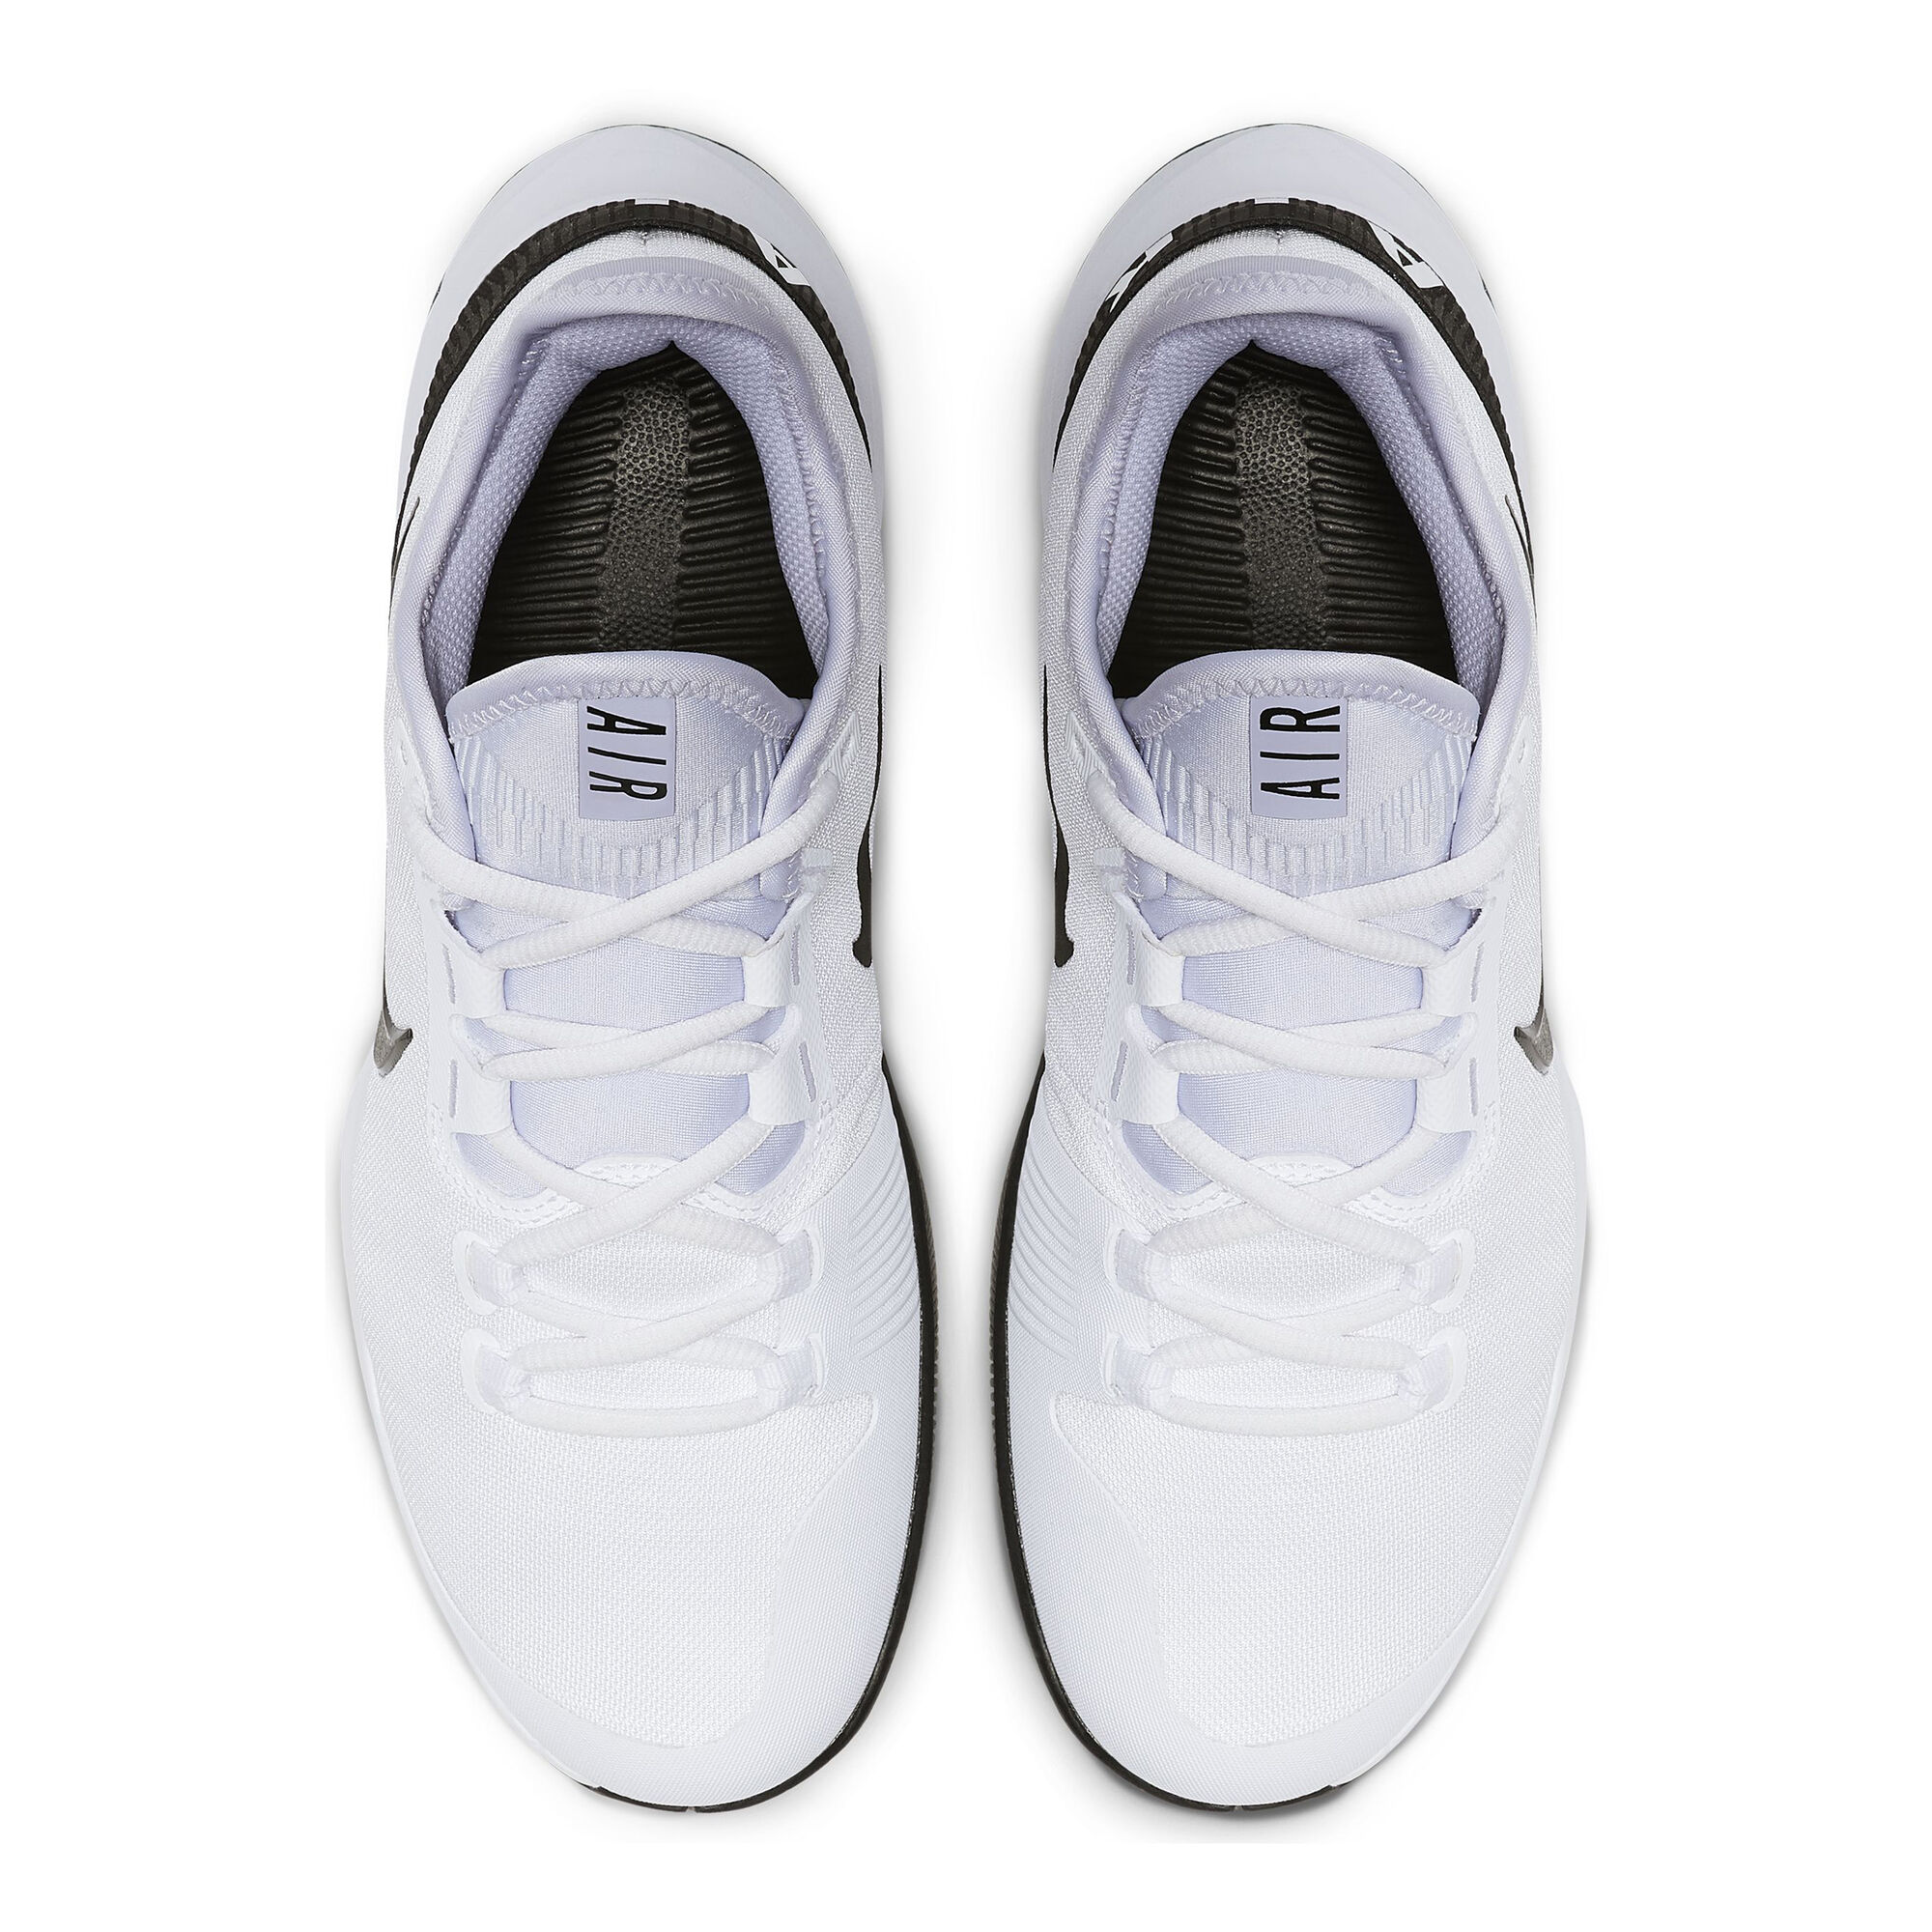 buy Nike Air Max Wildcard All Court Shoe Women - White, Black online ...